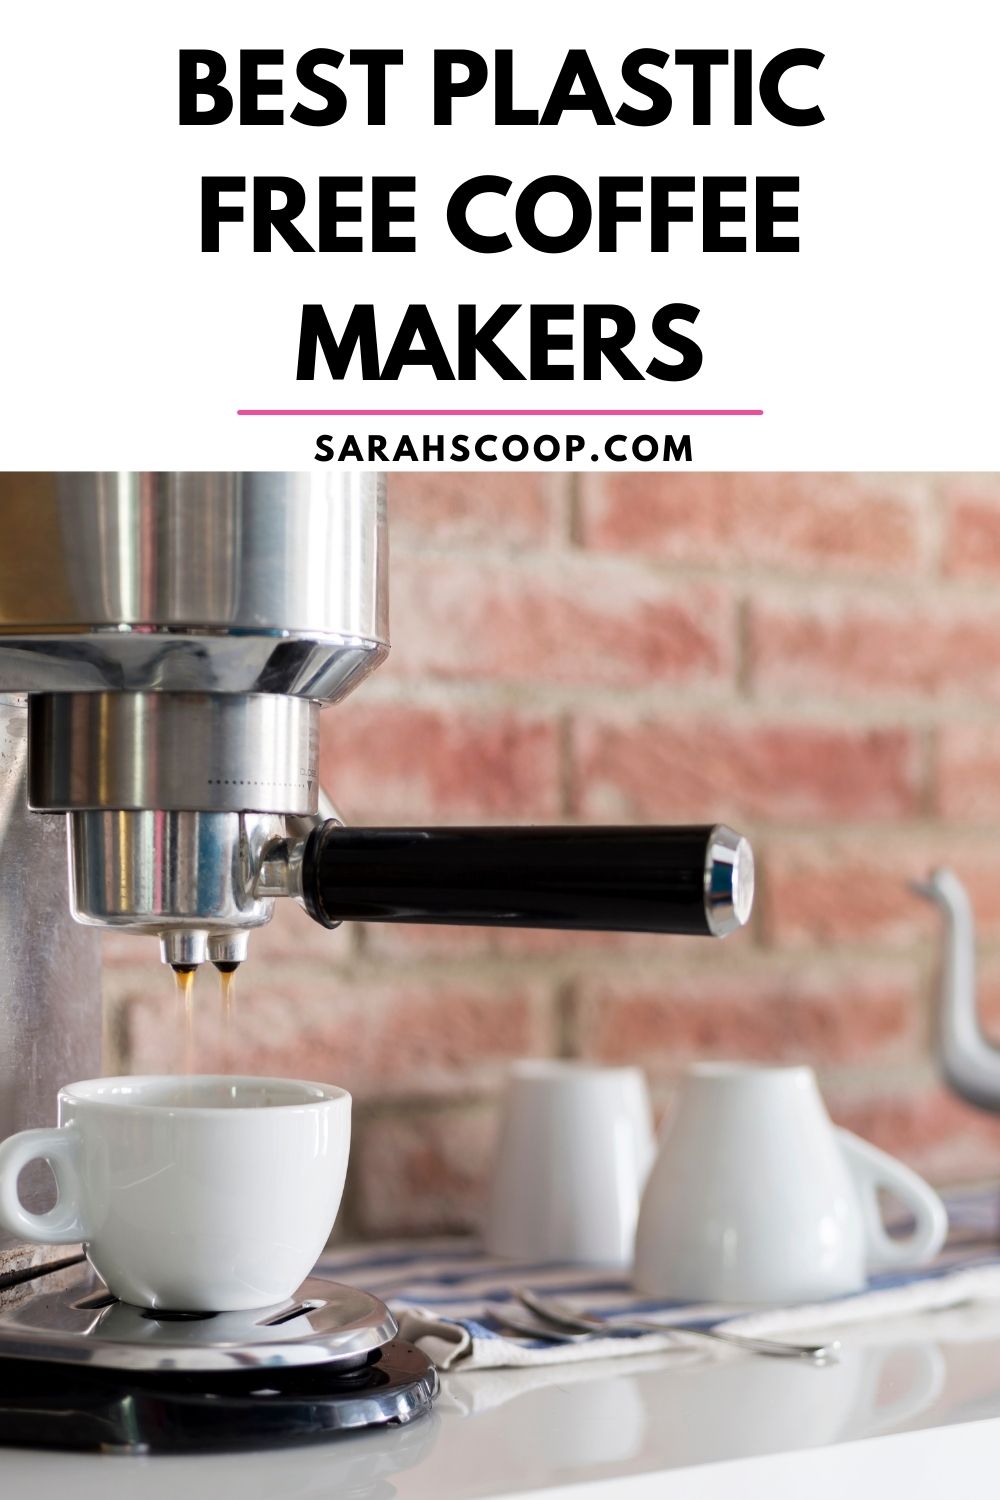 https://sarahscoop.com/wp-content/uploads/2022/09/best-plastic-free-coffee-makers.jpg